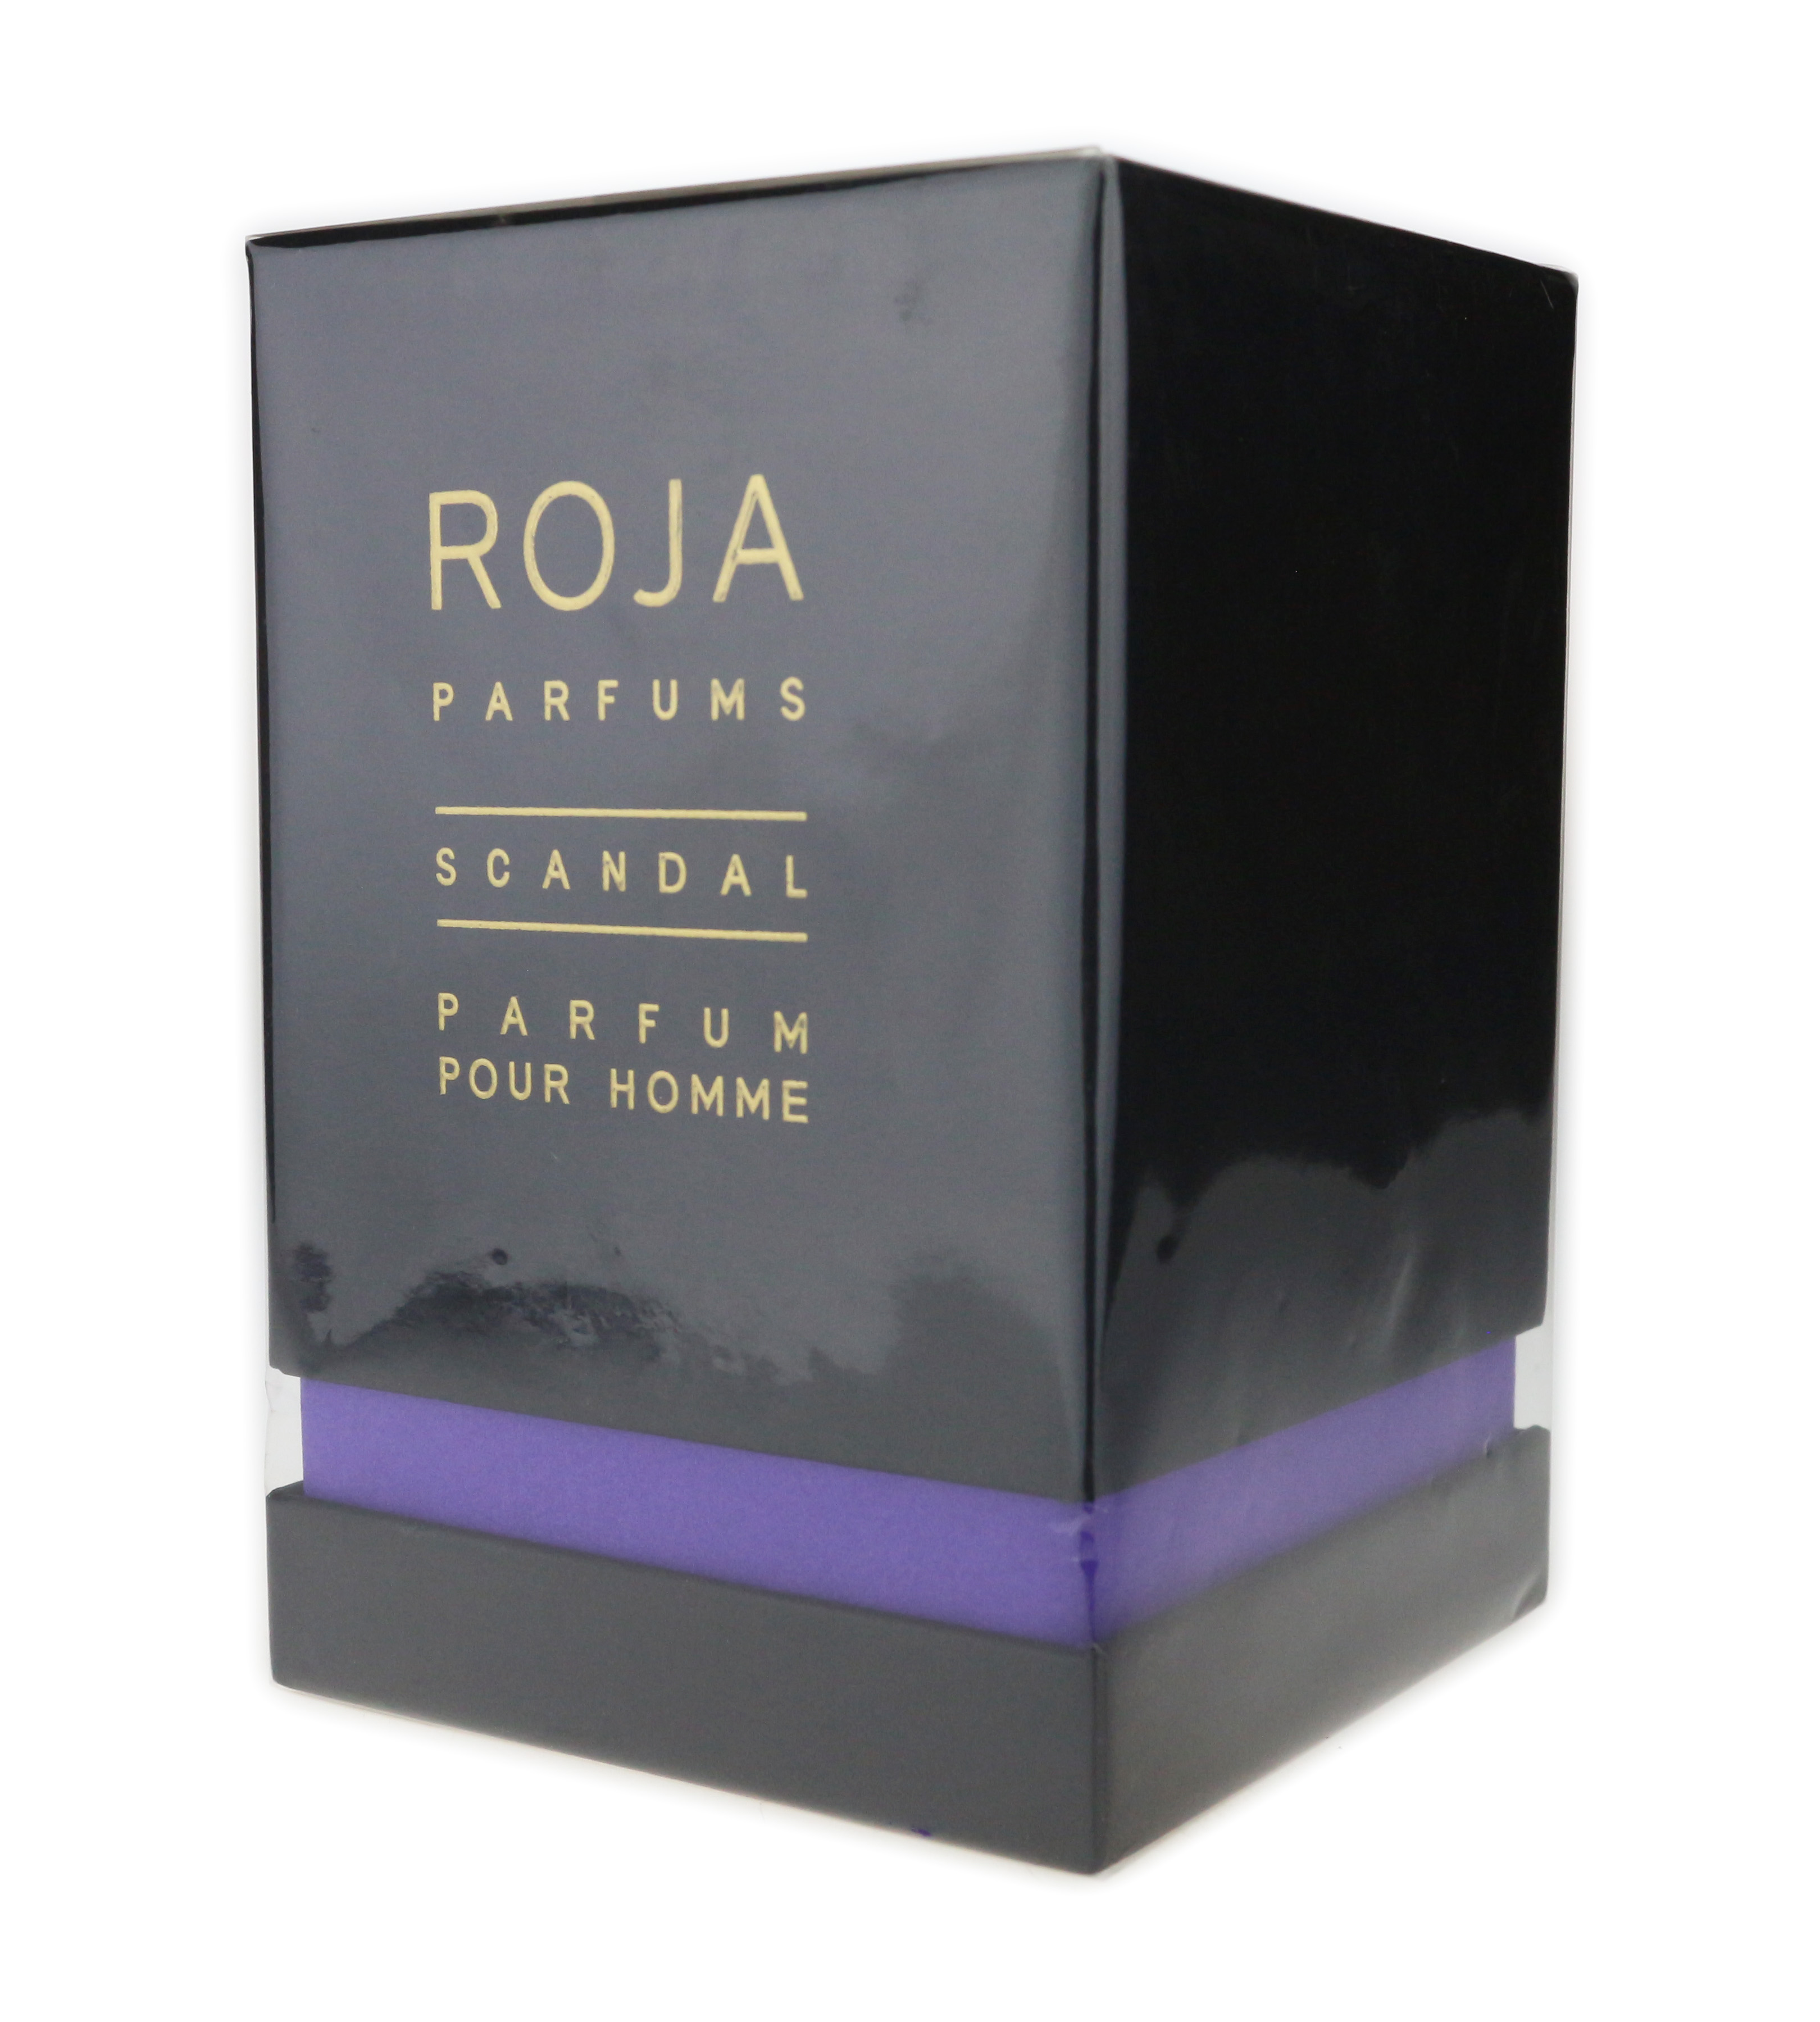 Roja Dove 'Scandal Pour Homme' Parfum 1.7oz/50ml New In Box